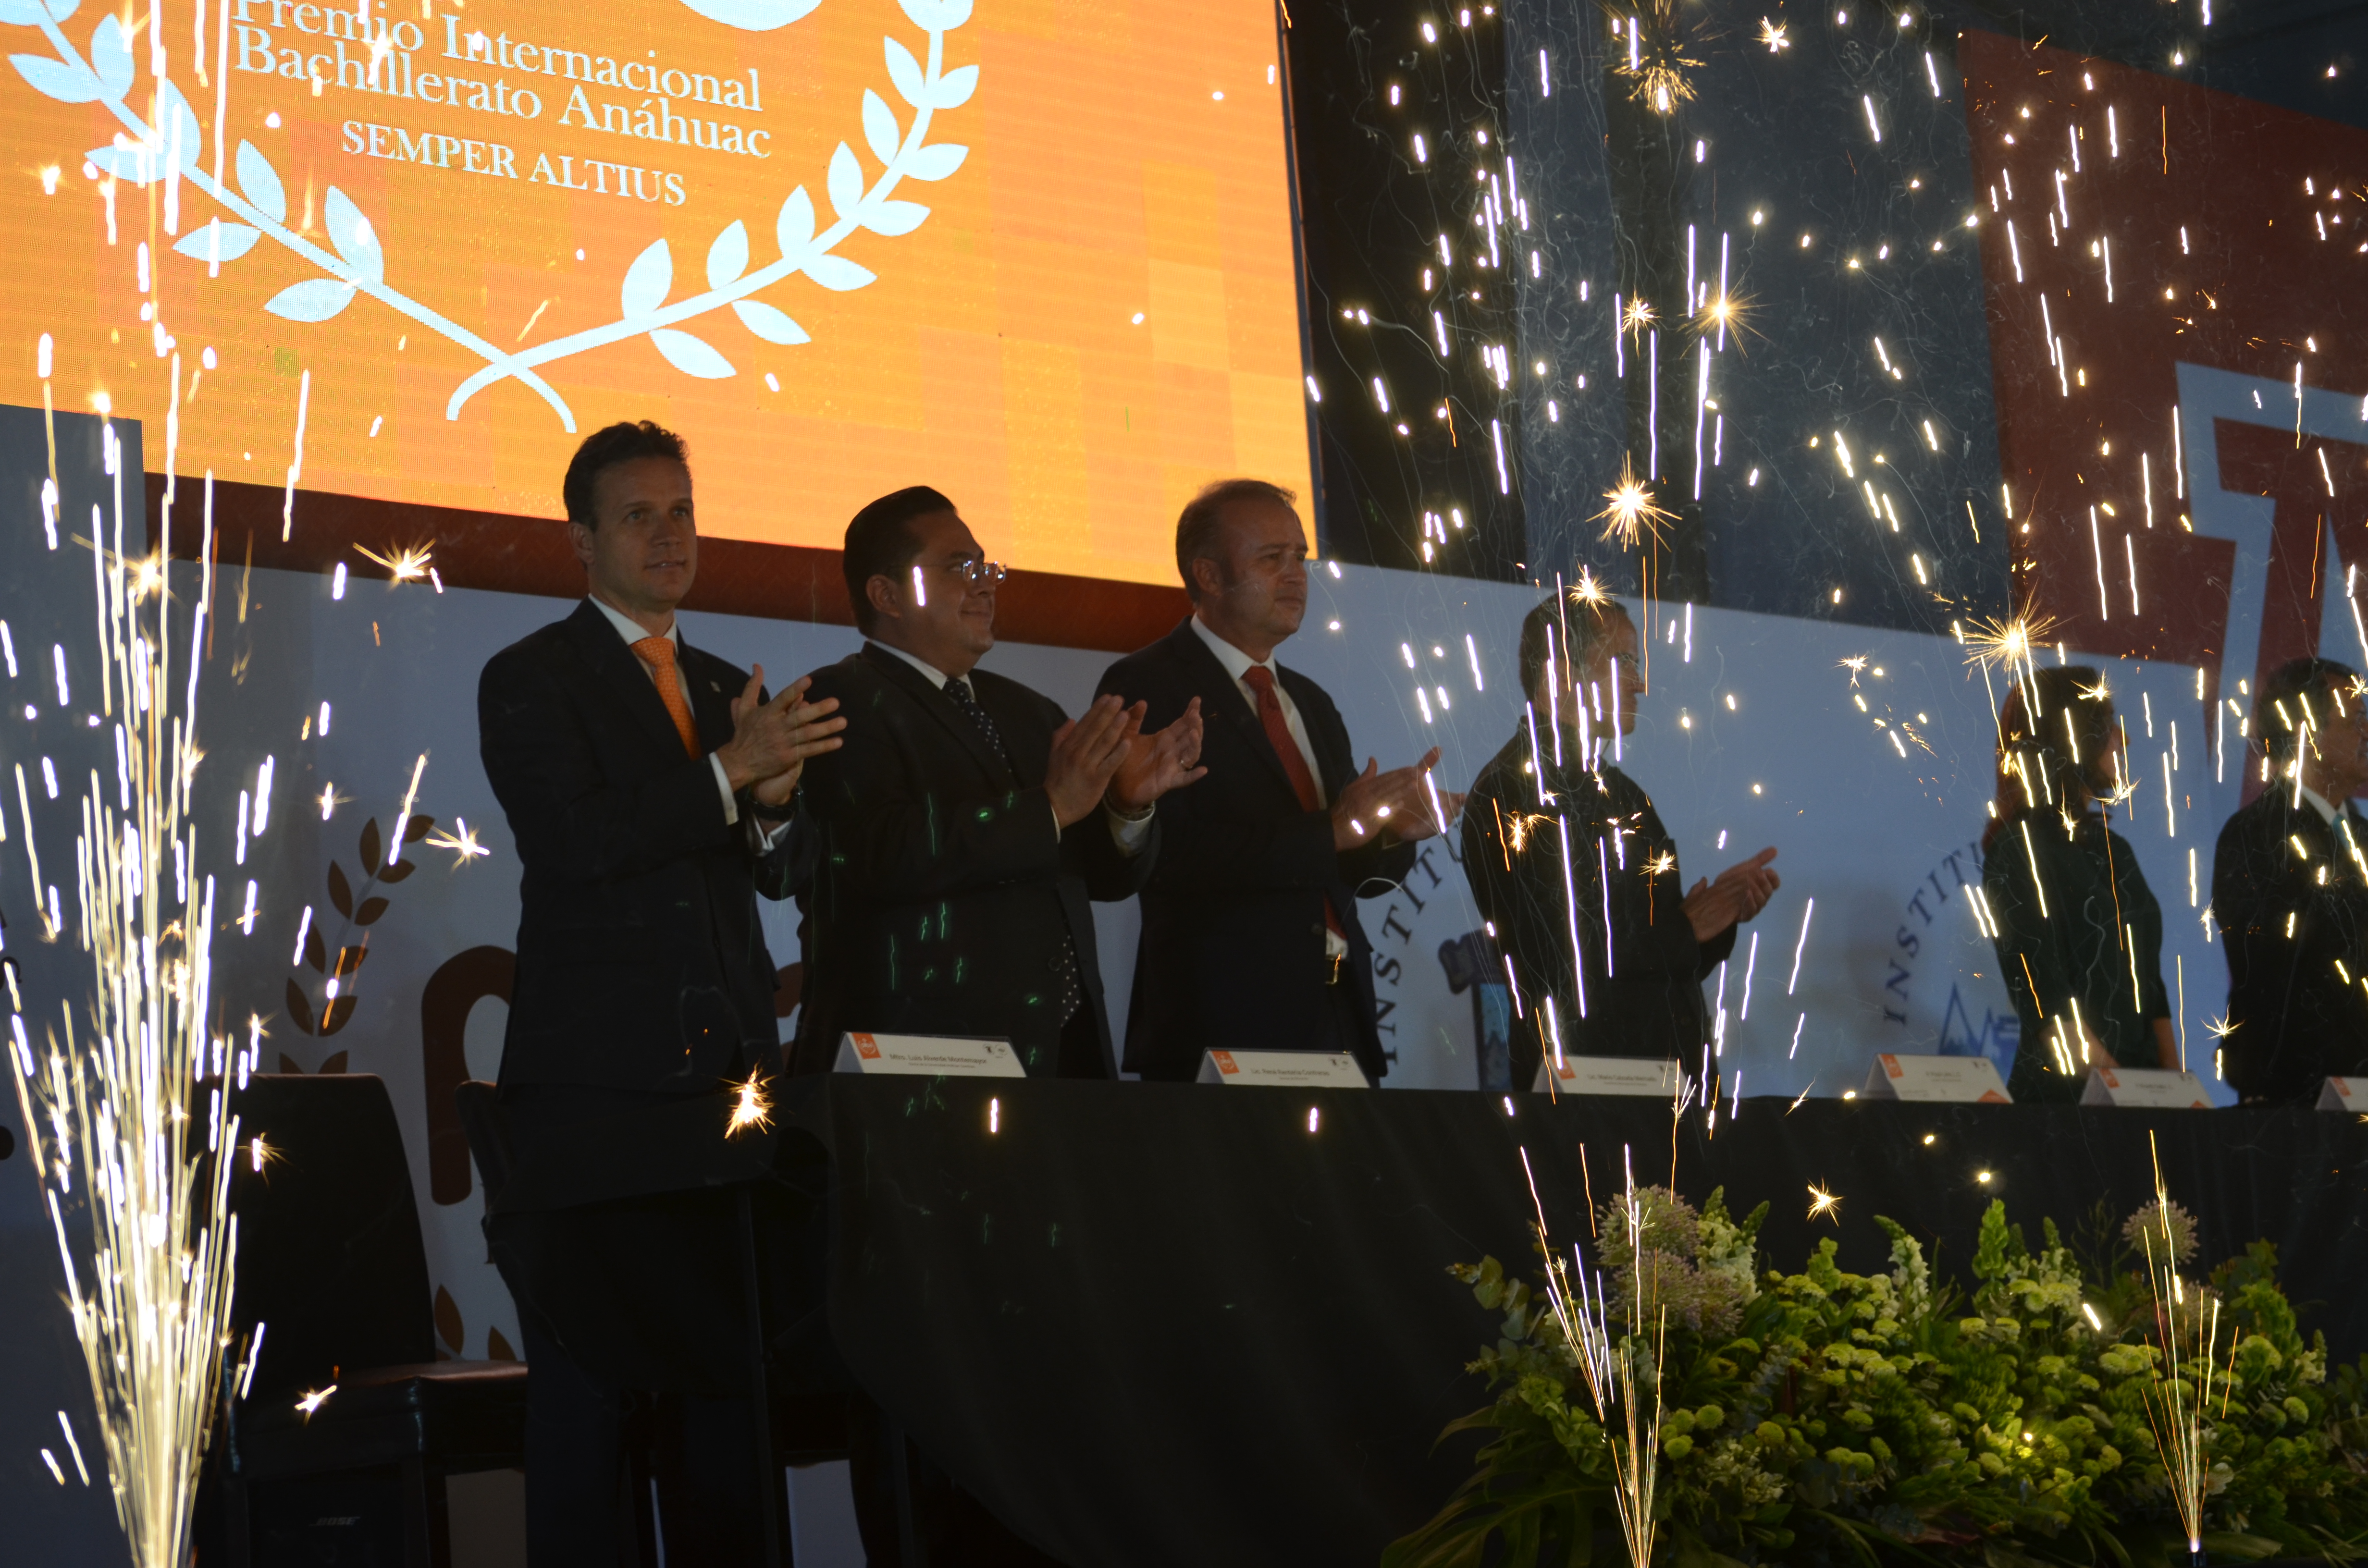 XXI Premio Internacional Bachillerato Anáhuac